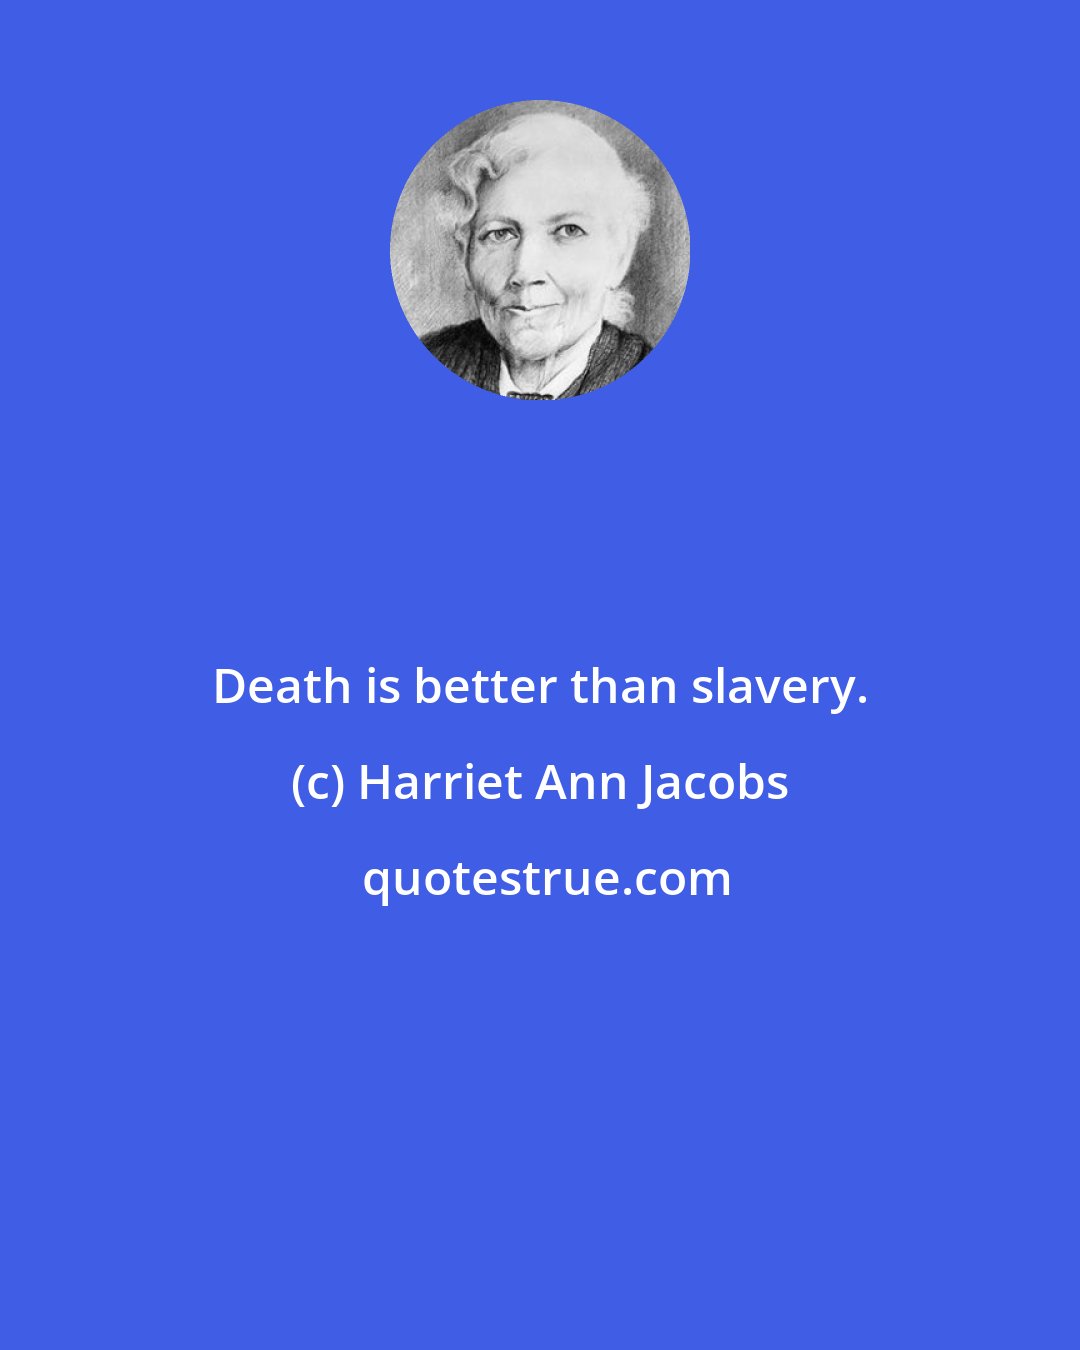 Harriet Ann Jacobs: Death is better than slavery.